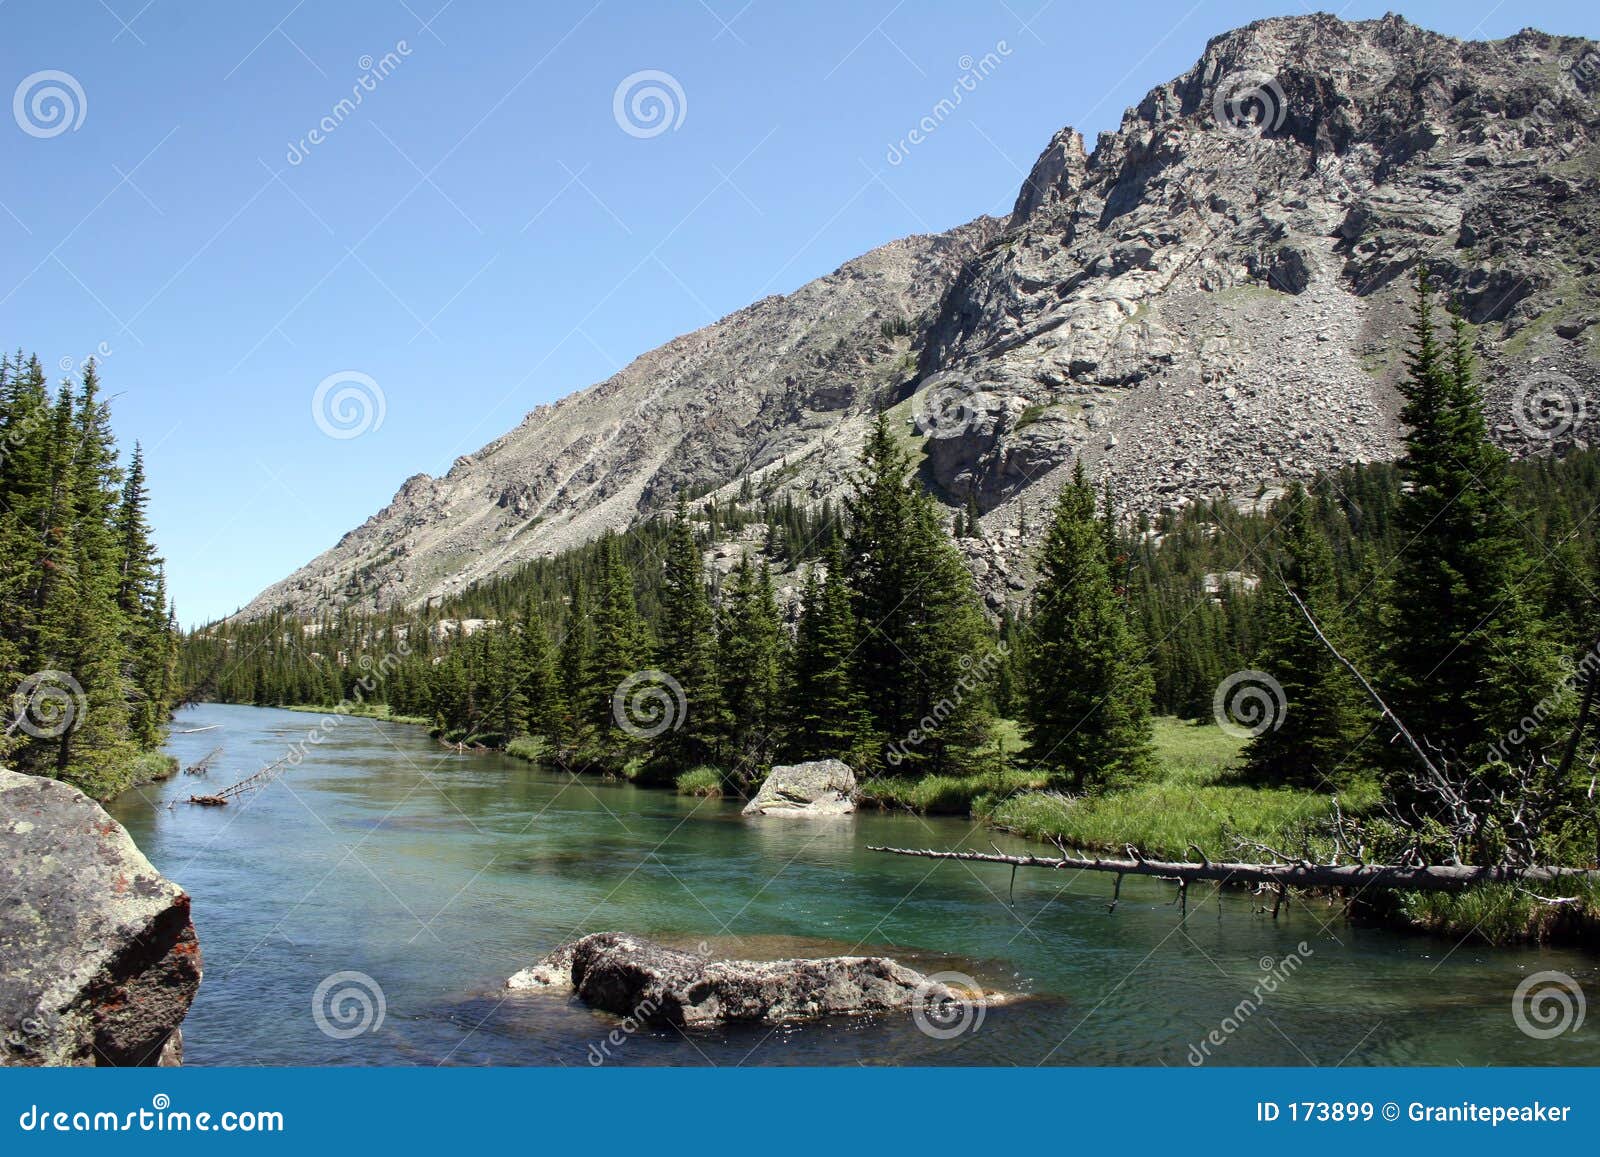 beautiful montana - west fork of the rock creek